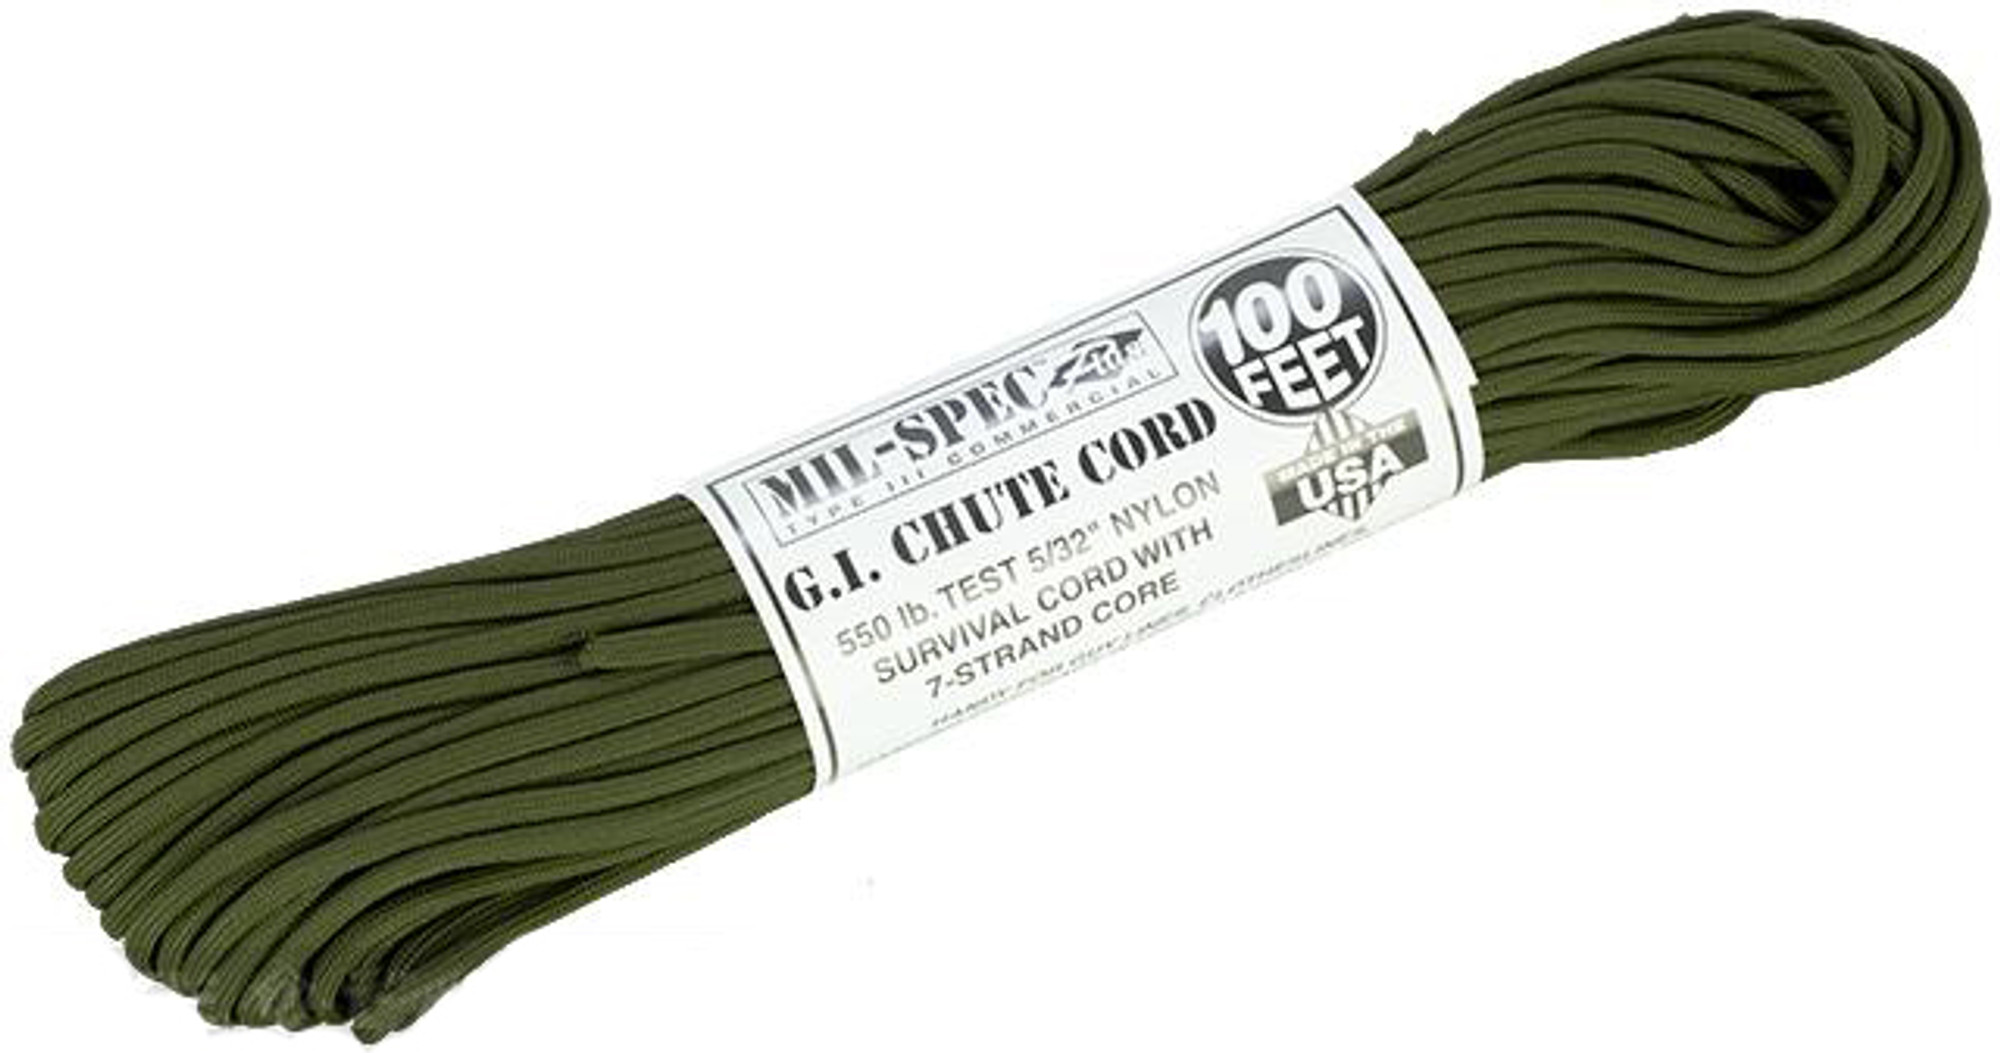 Matrix MIL-SPEC GI Chute Nylon Survival Para Cord - 100 Feet - OD Green